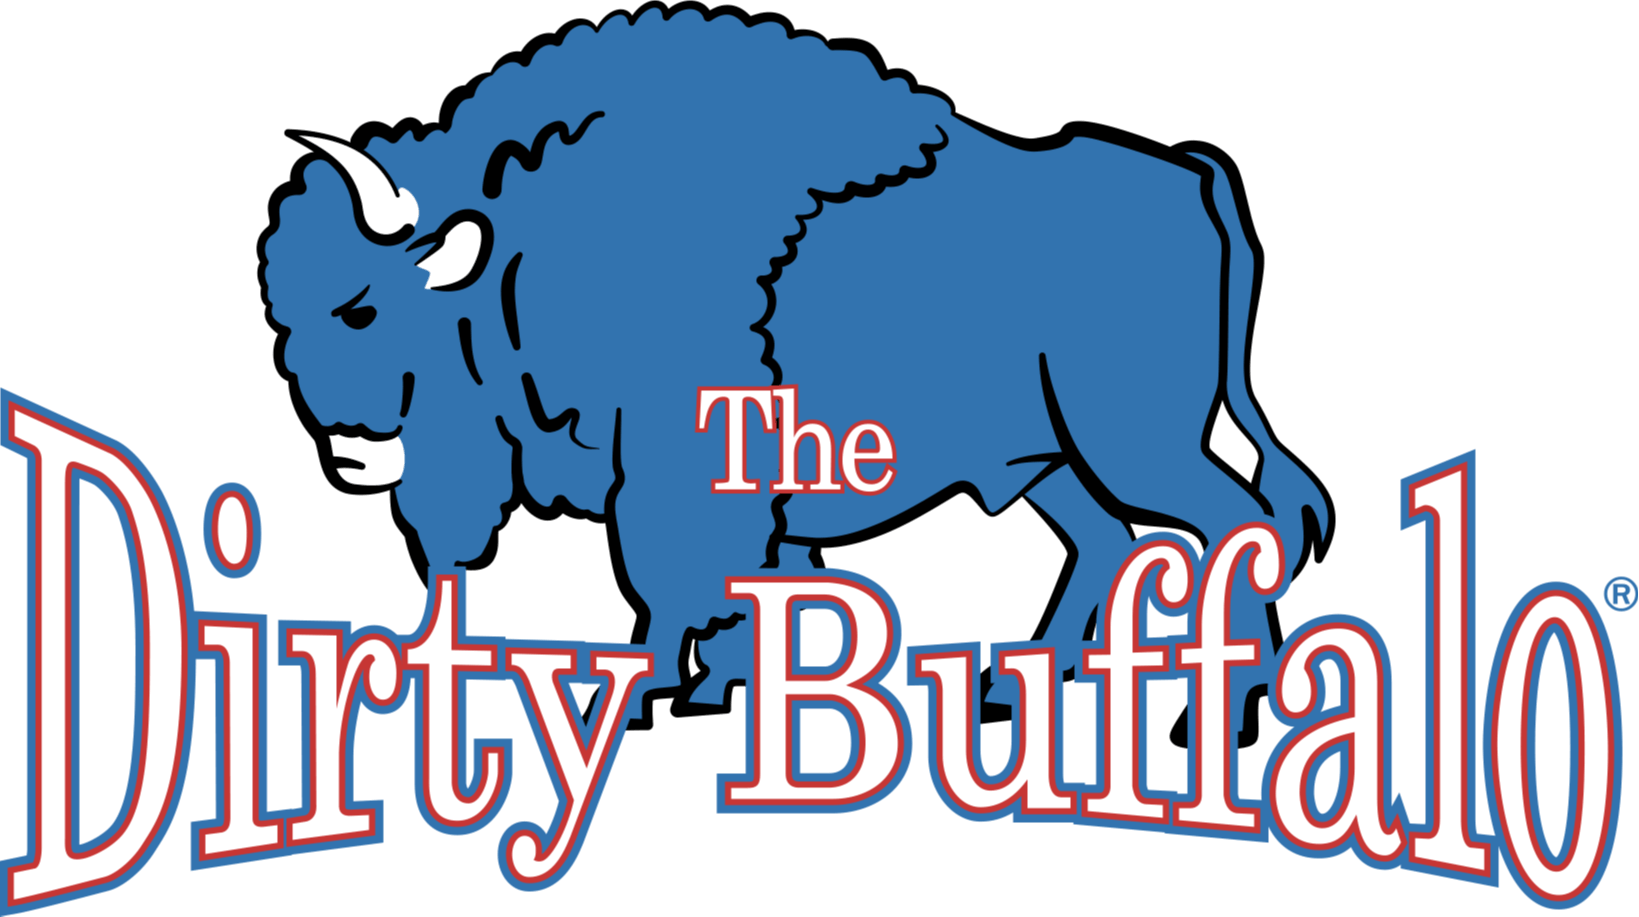 The Dirty Buffalo - Chesapeake